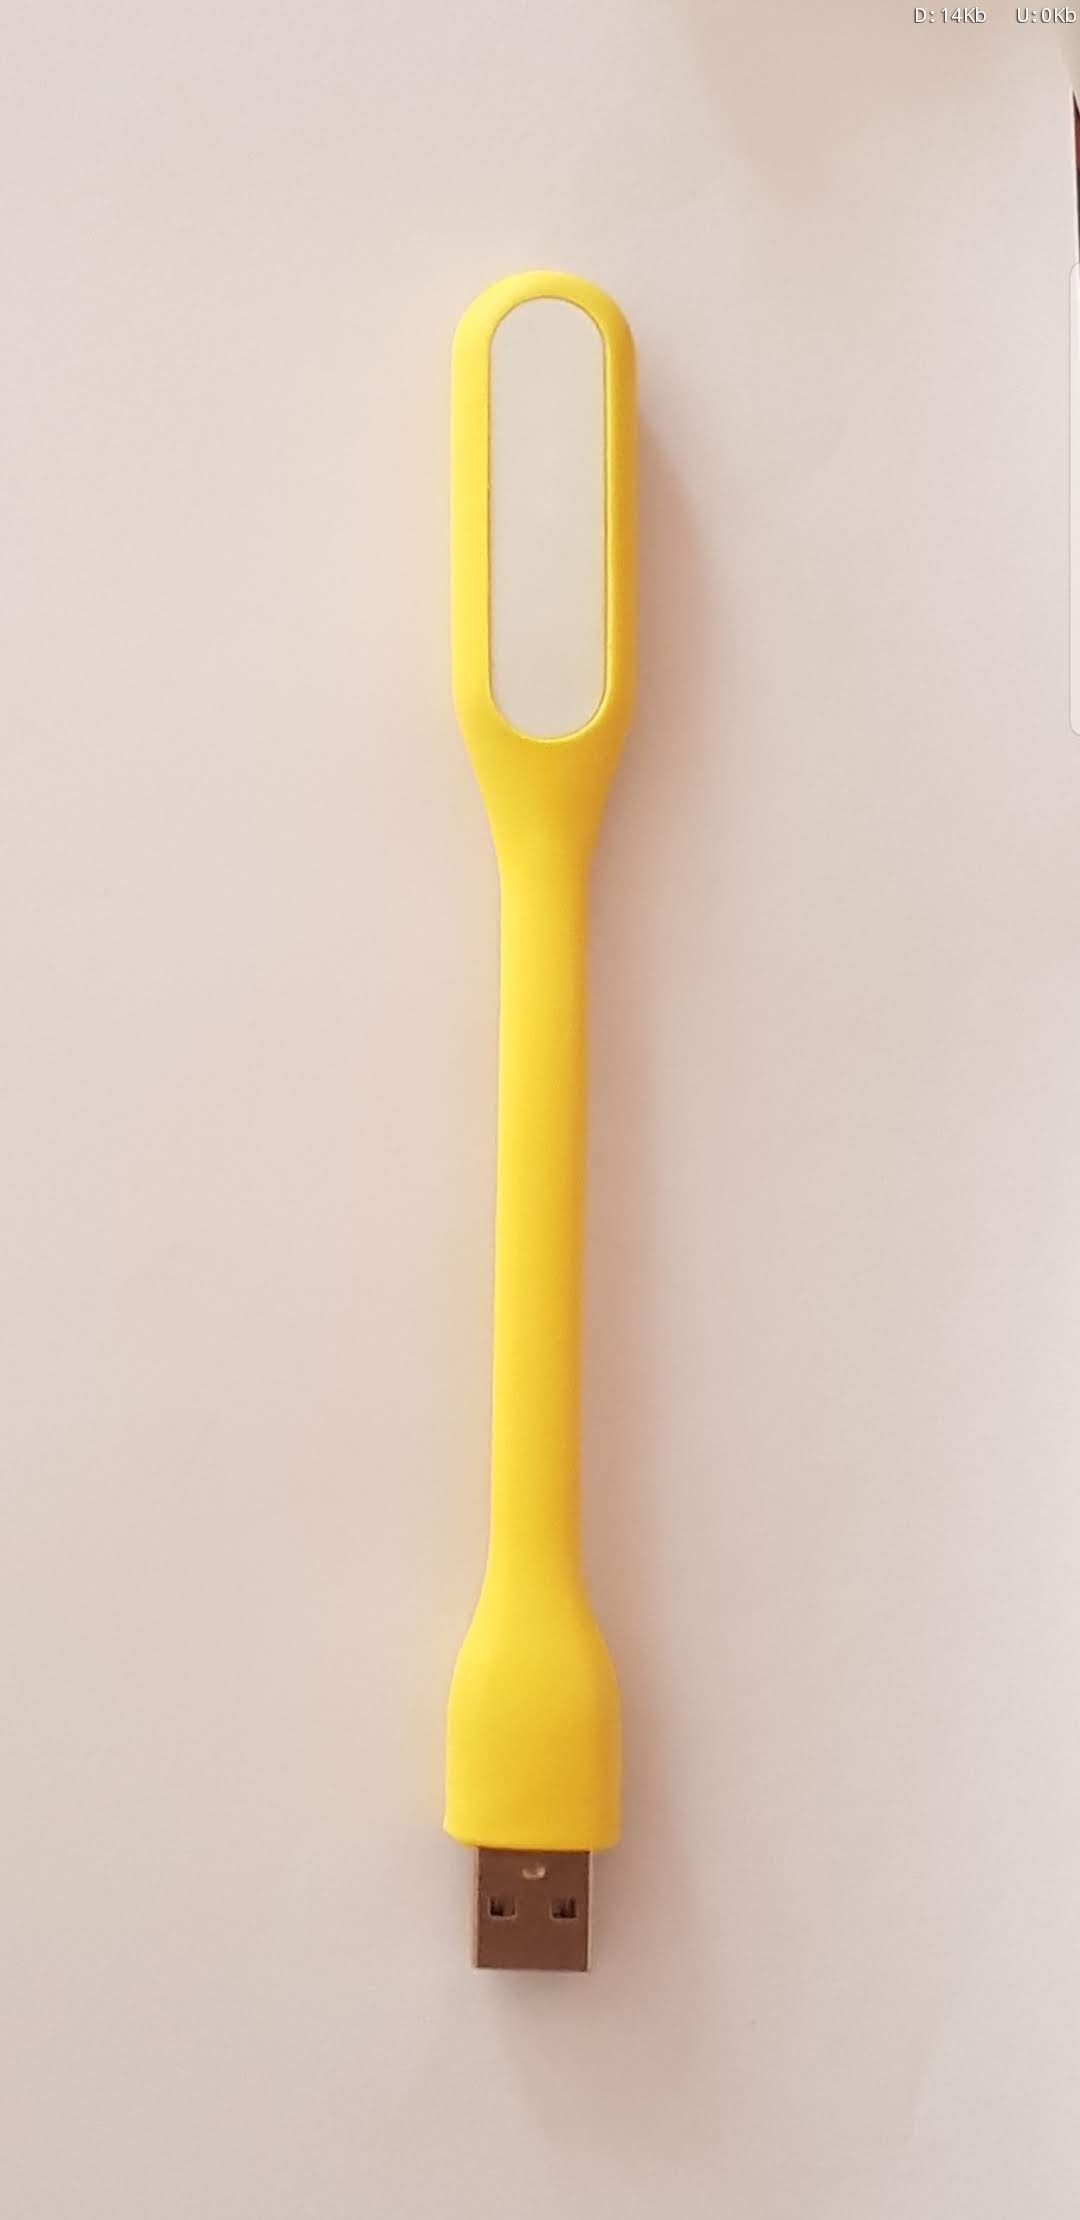 USB LED Light - yellow